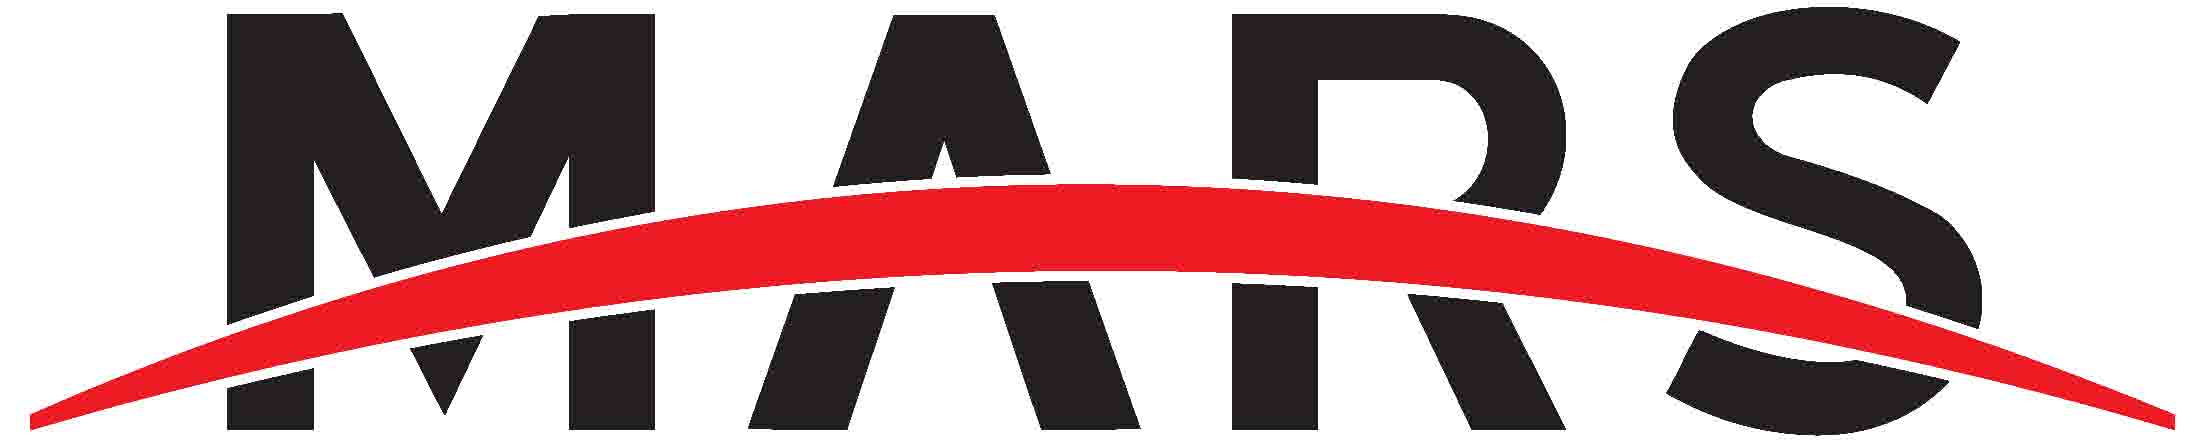 Mars Group logo